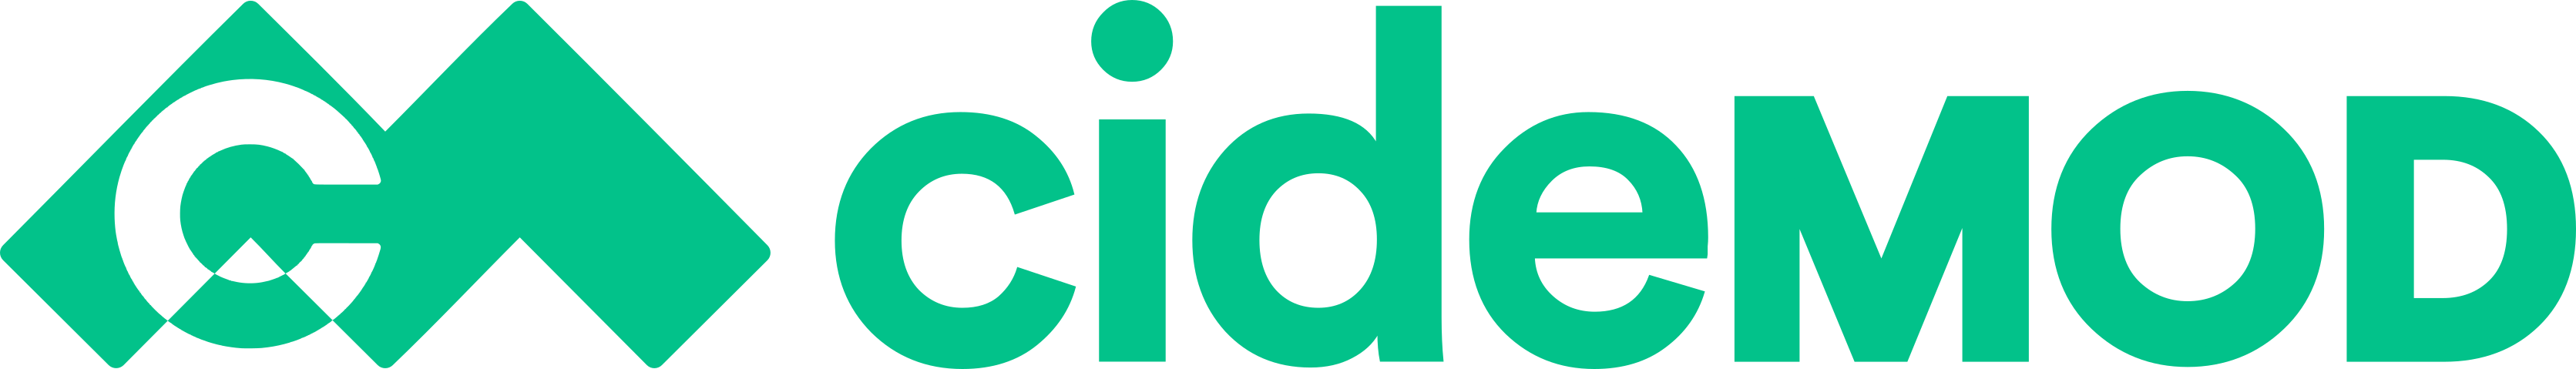 cideMOD_logo